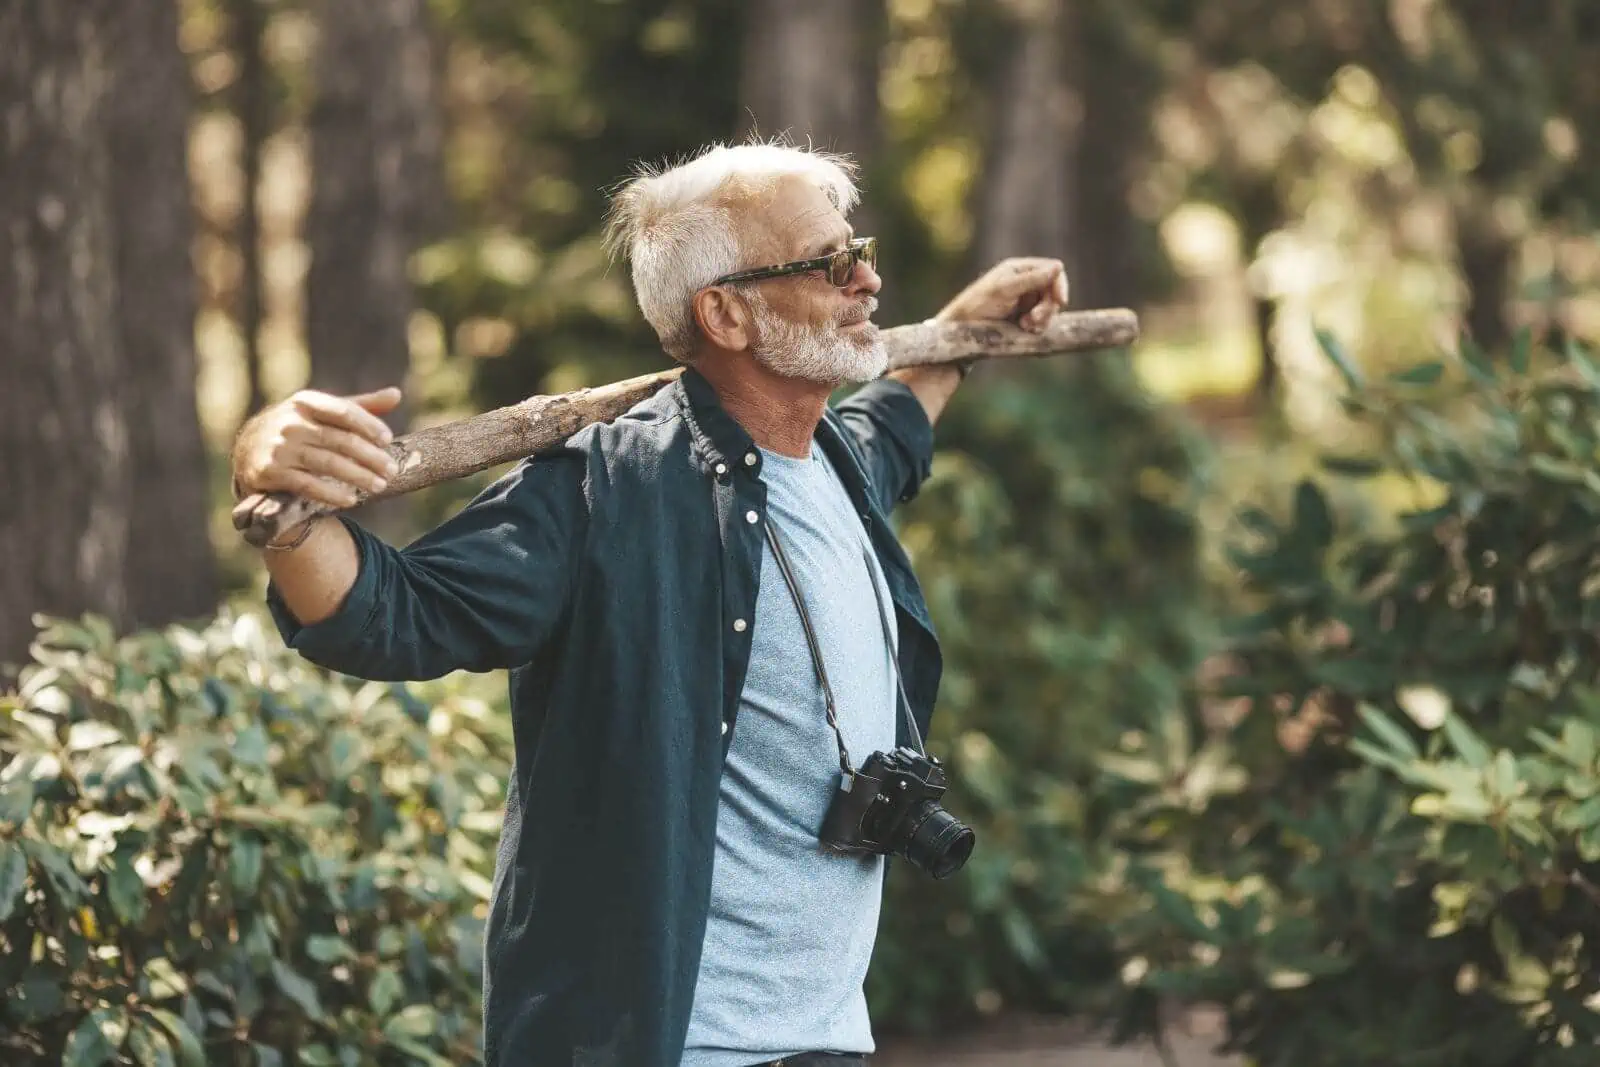 Mature man holding walking stick and camera